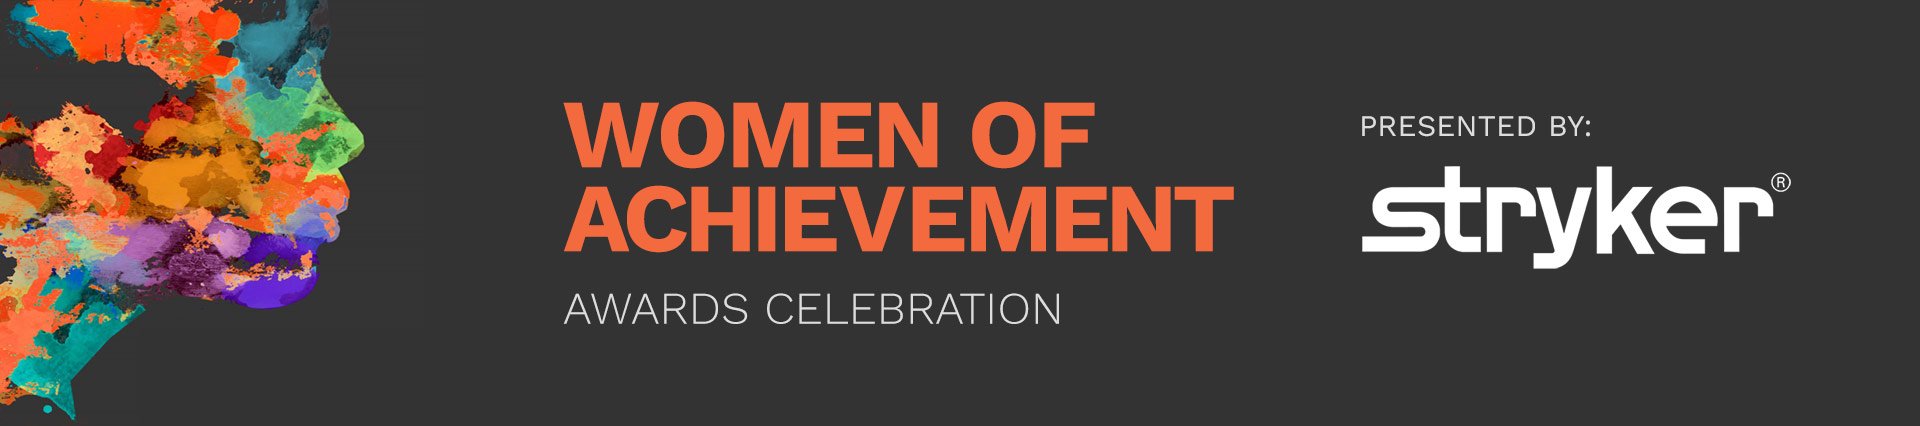 Women of Achievement Awards Celebration